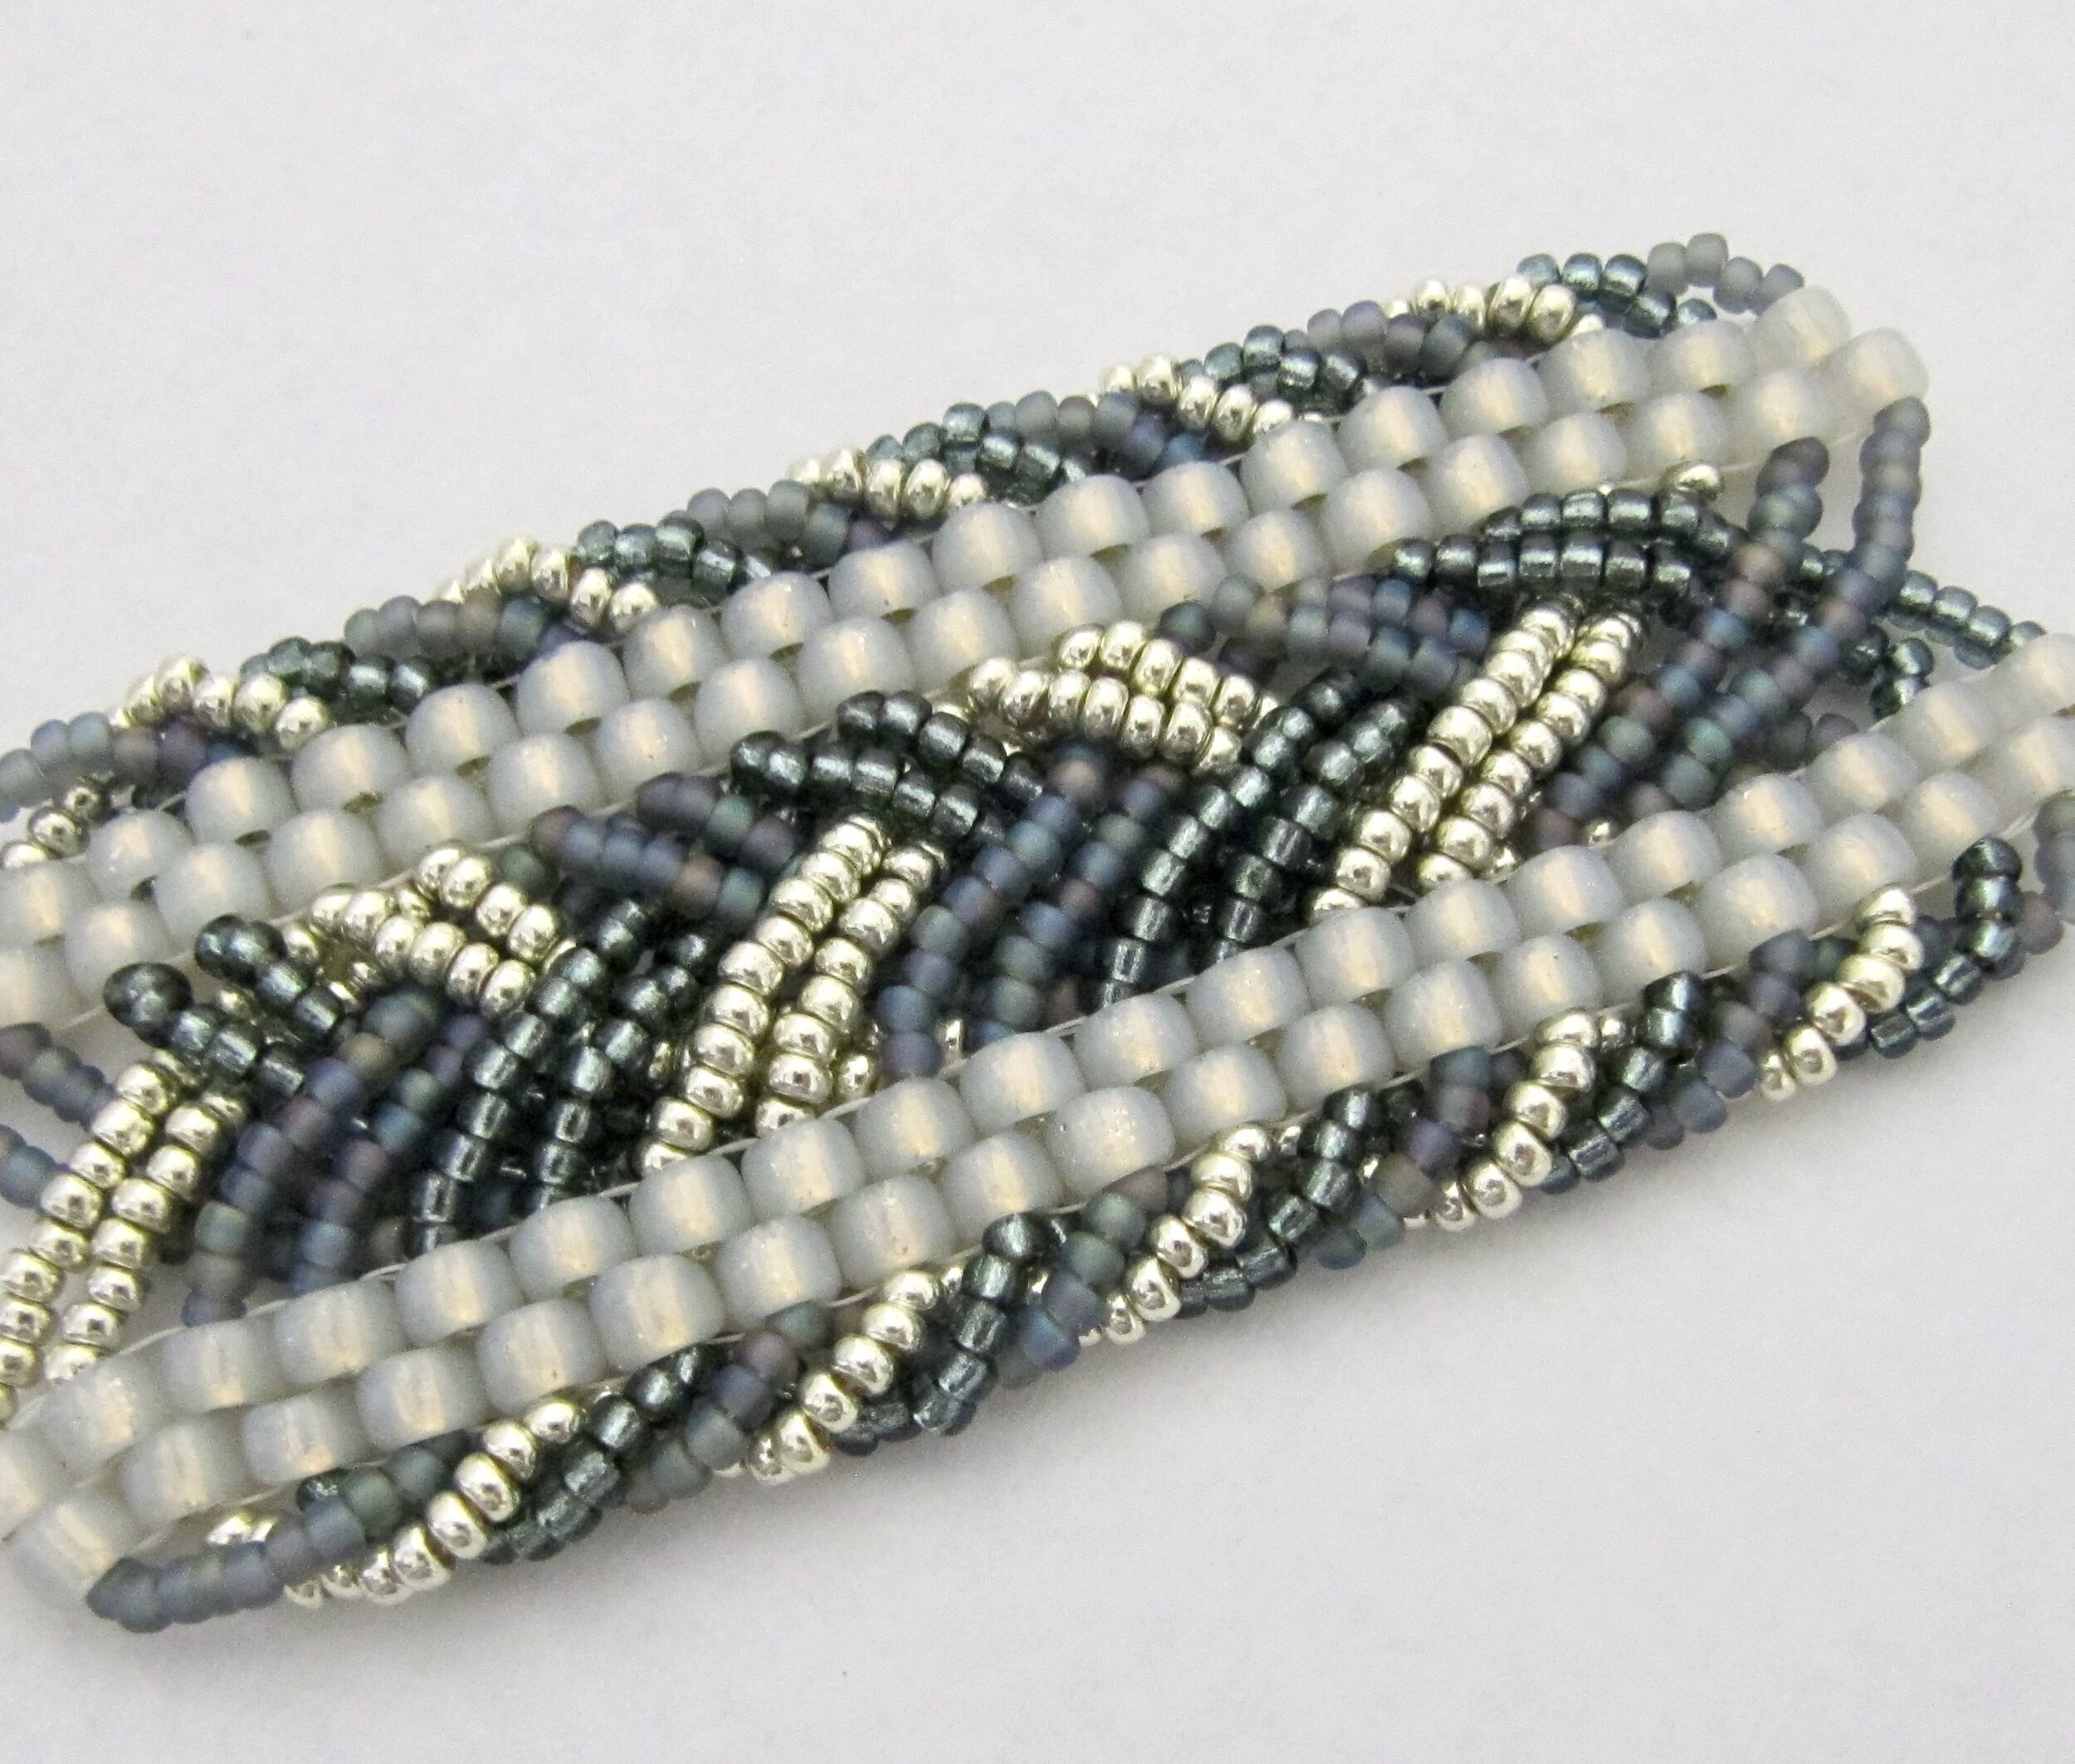 Miyuki Beads Bracelet Kit, Seed Bead Jewelry Kits